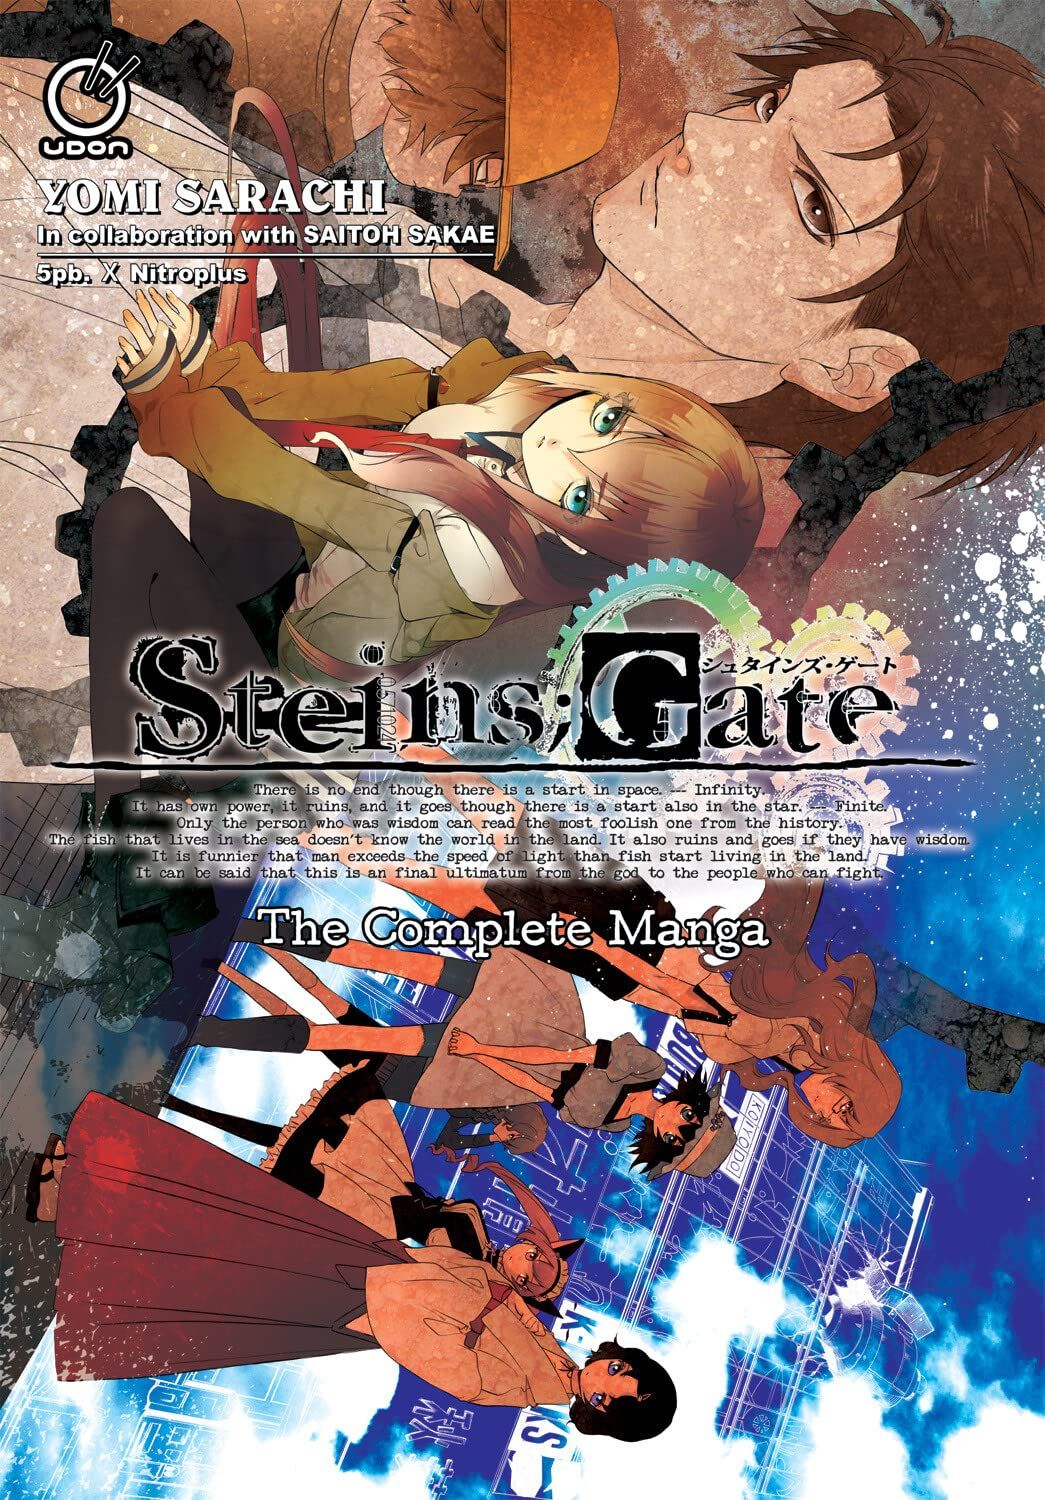 Steins;Gate by Yomi Sarachi cover